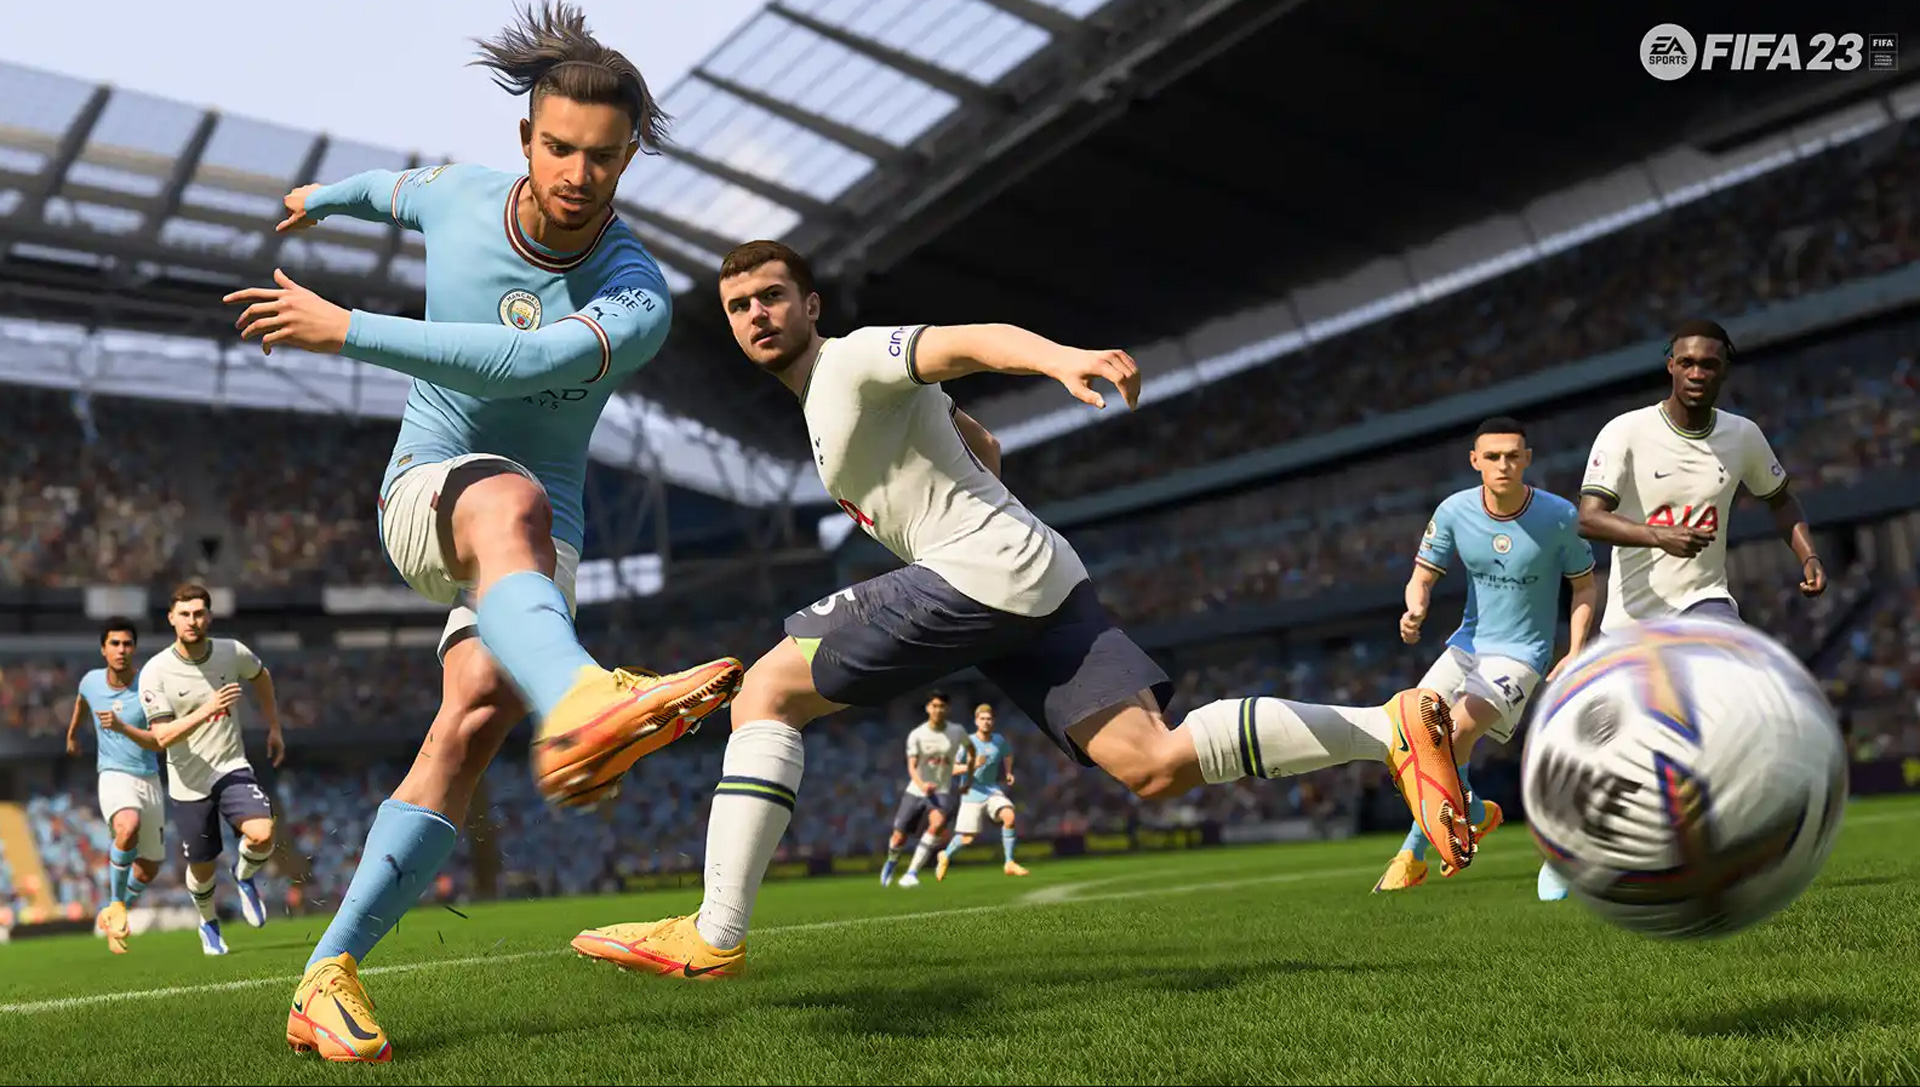 FIFA 23 player ratings predictions